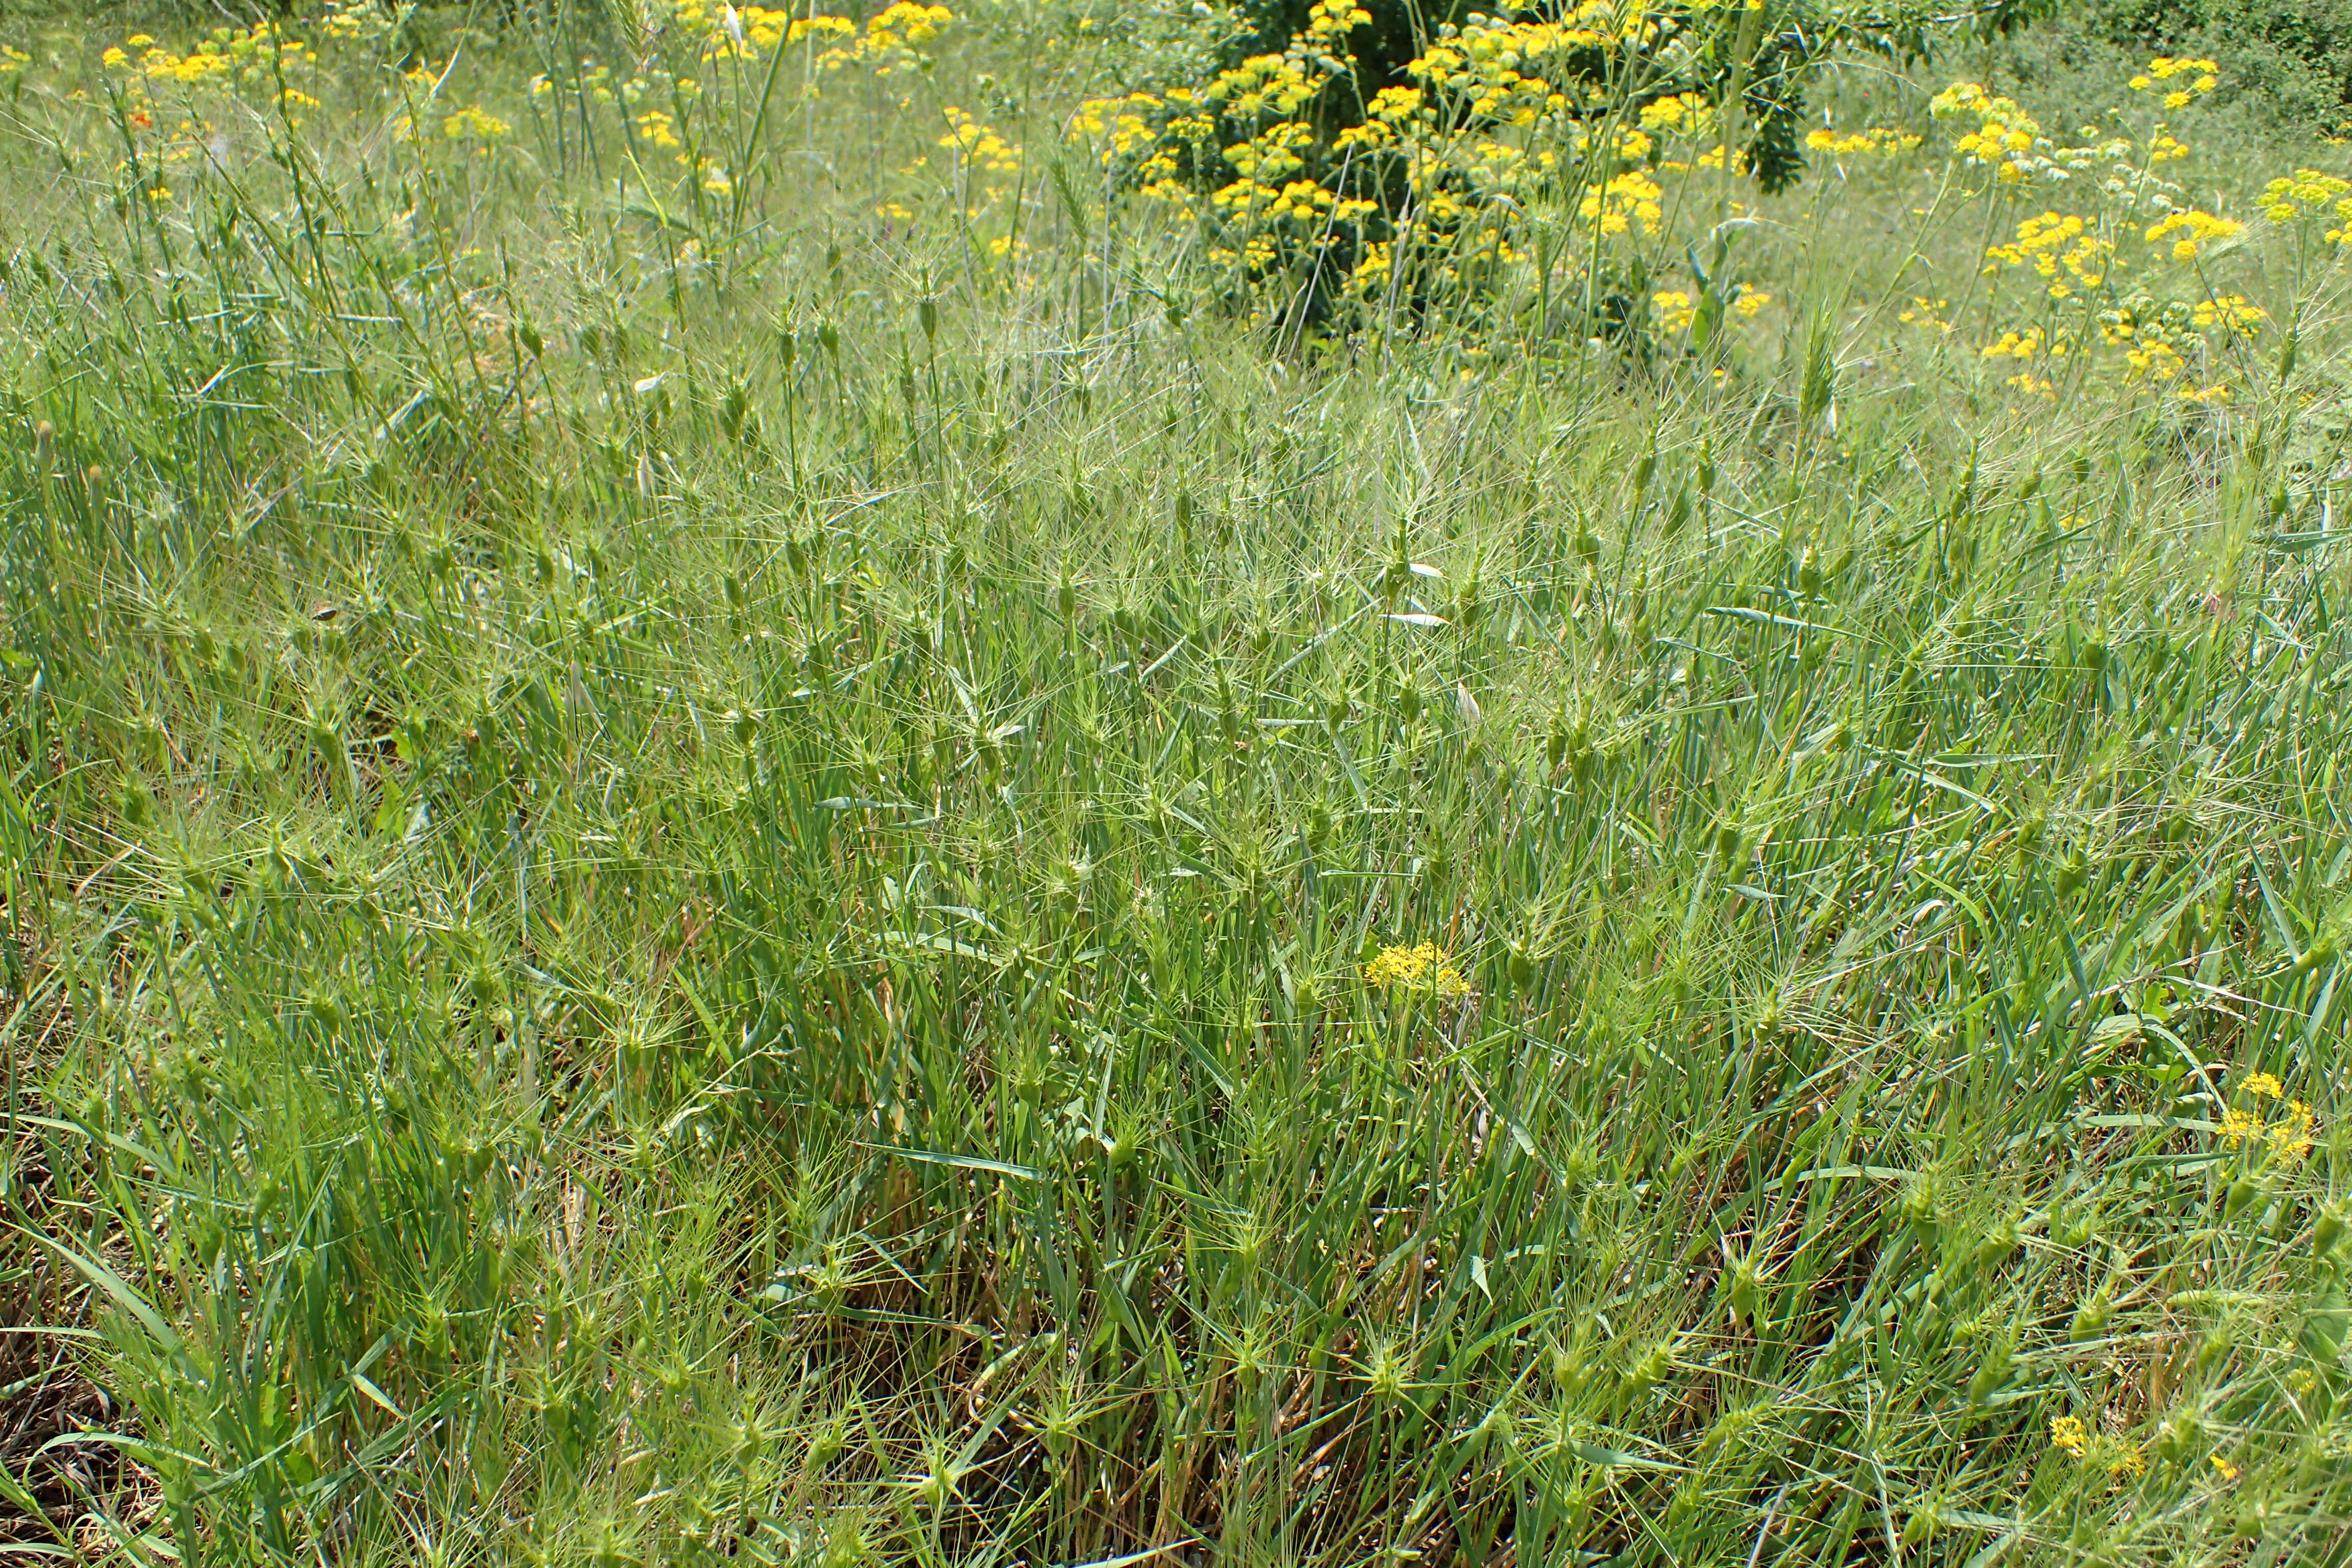 Image of Lorent's goatgrass